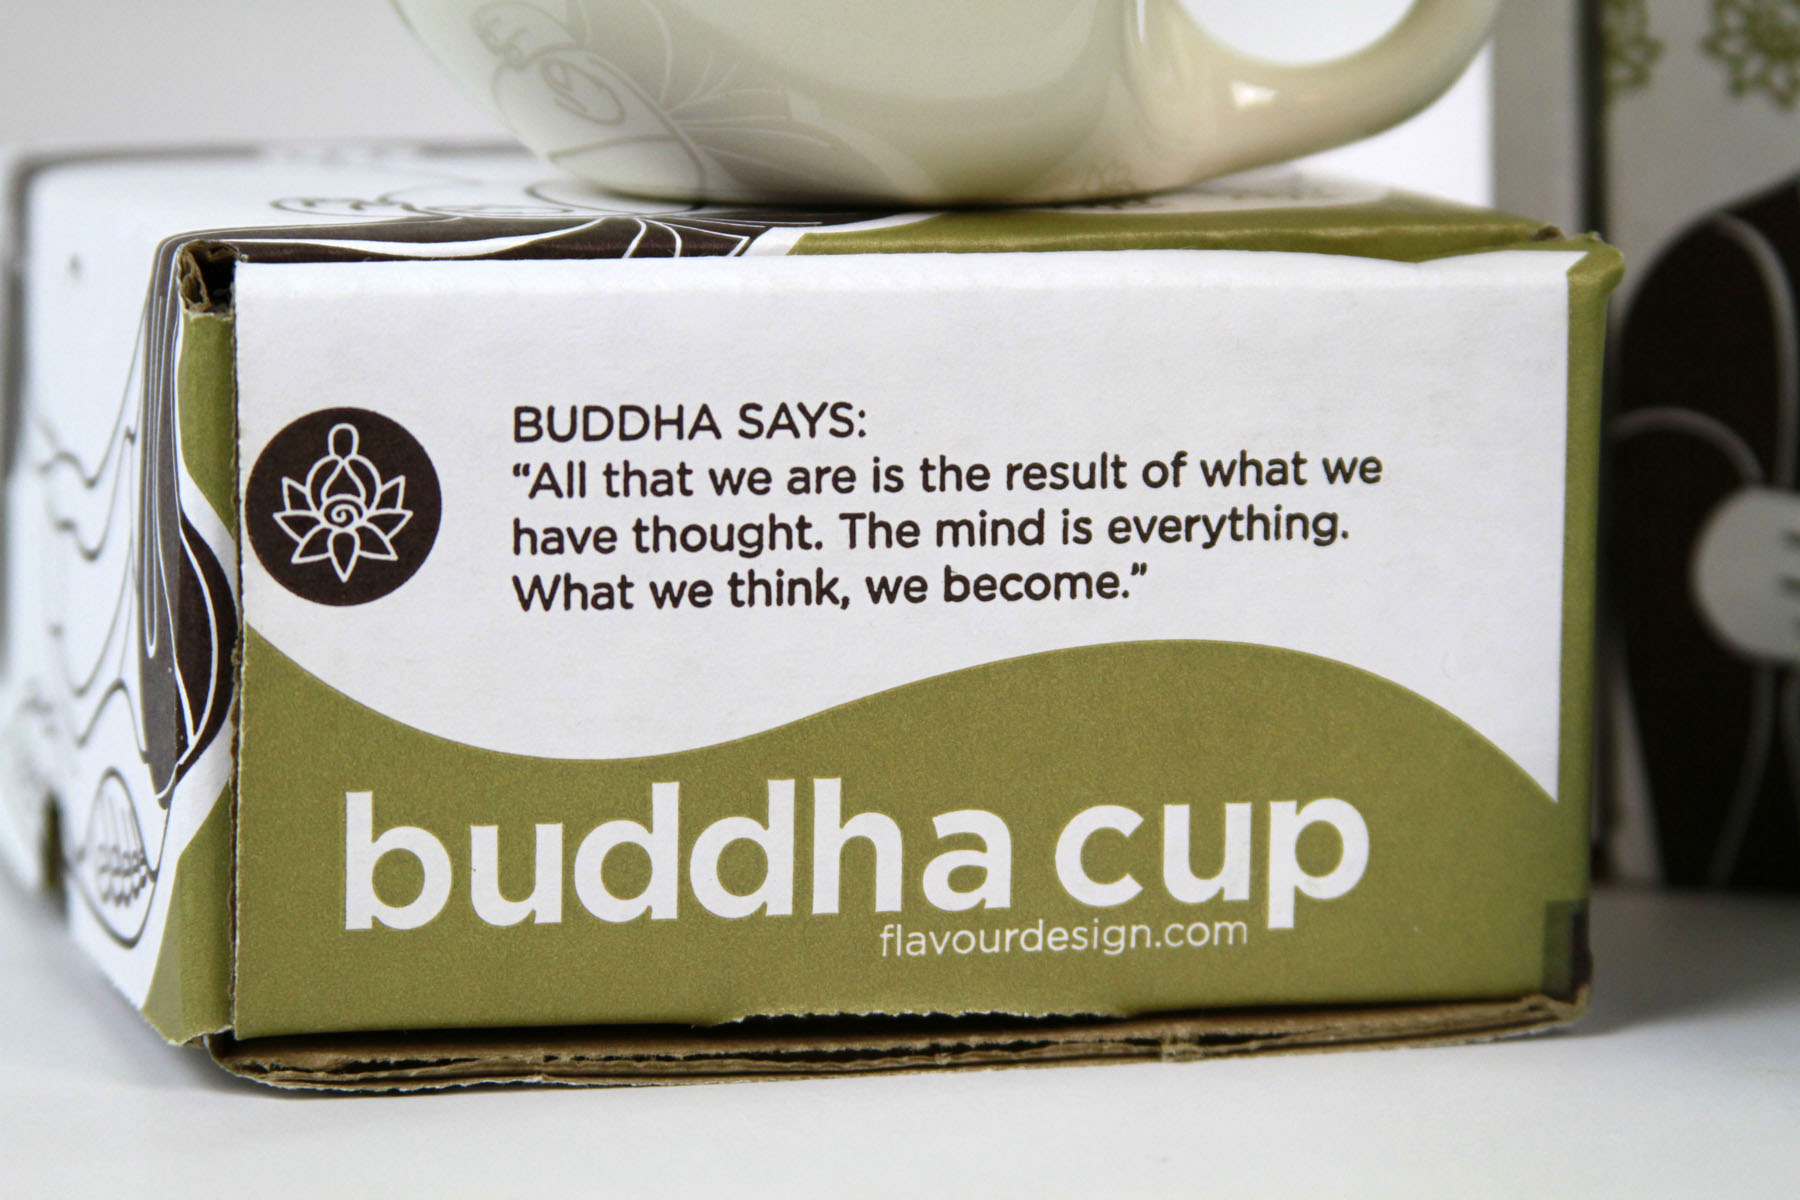 Buddhabox